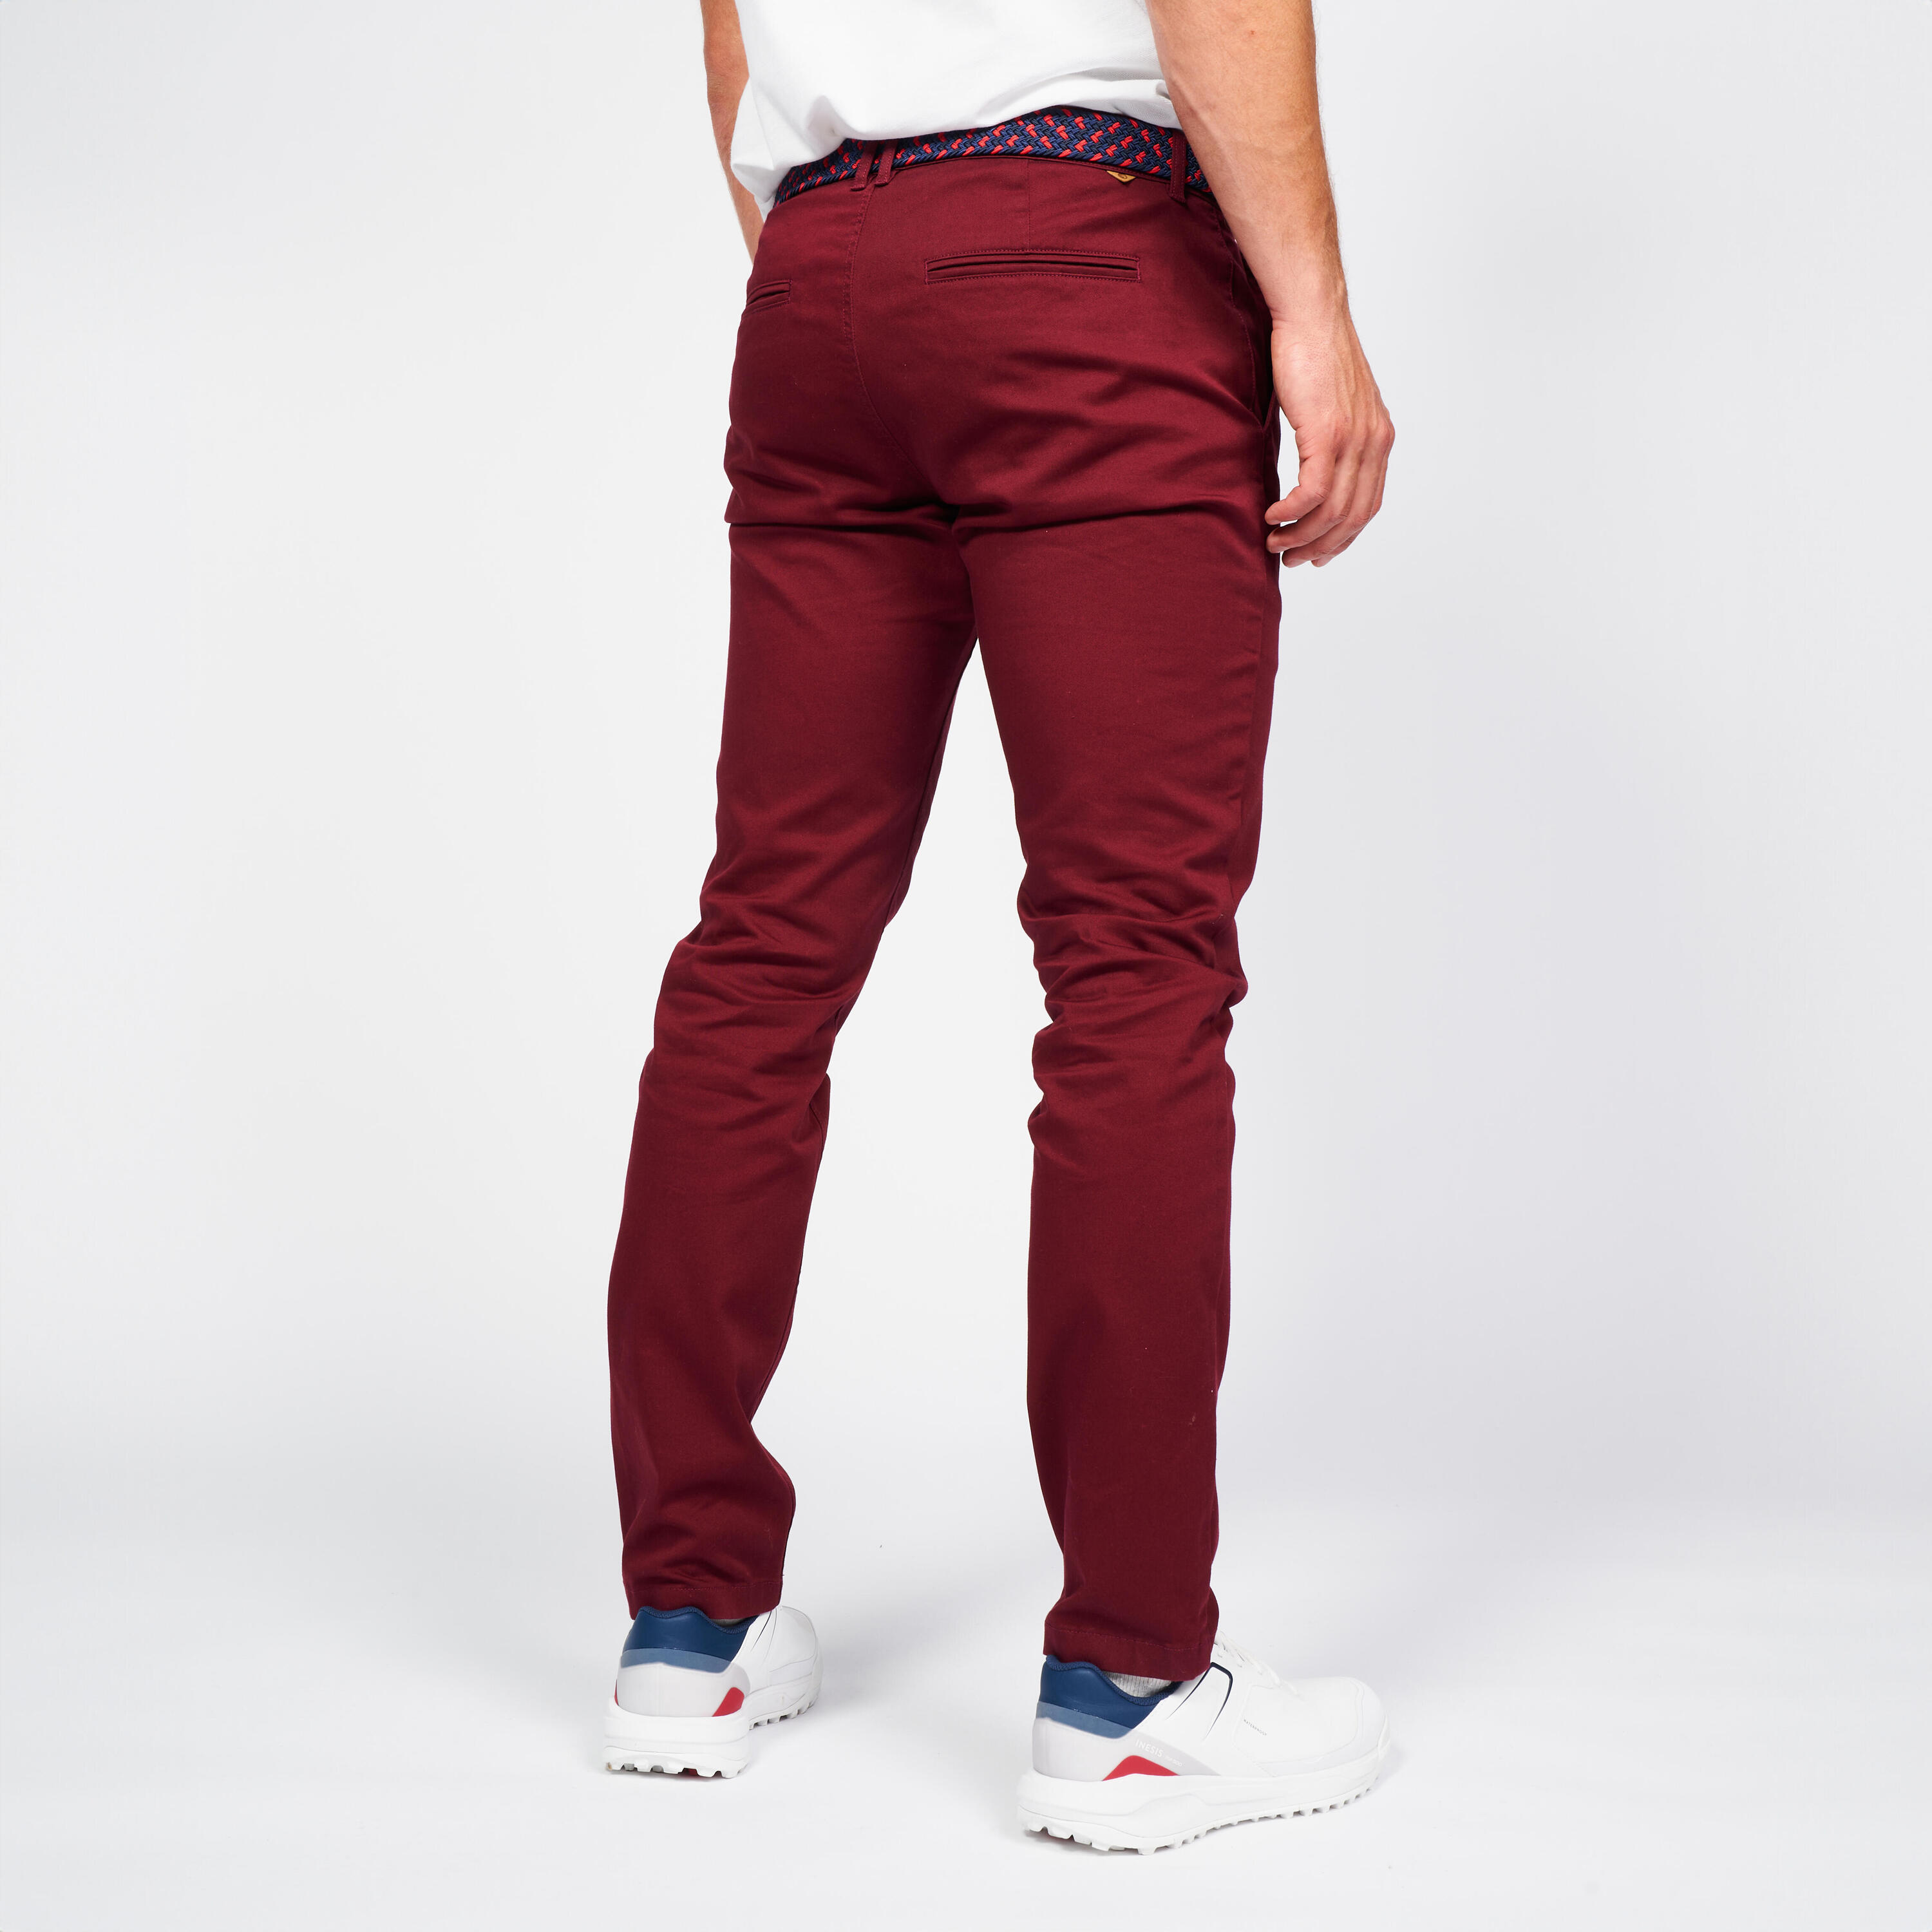 Men's golf trousers - MW500 dark red 2/4